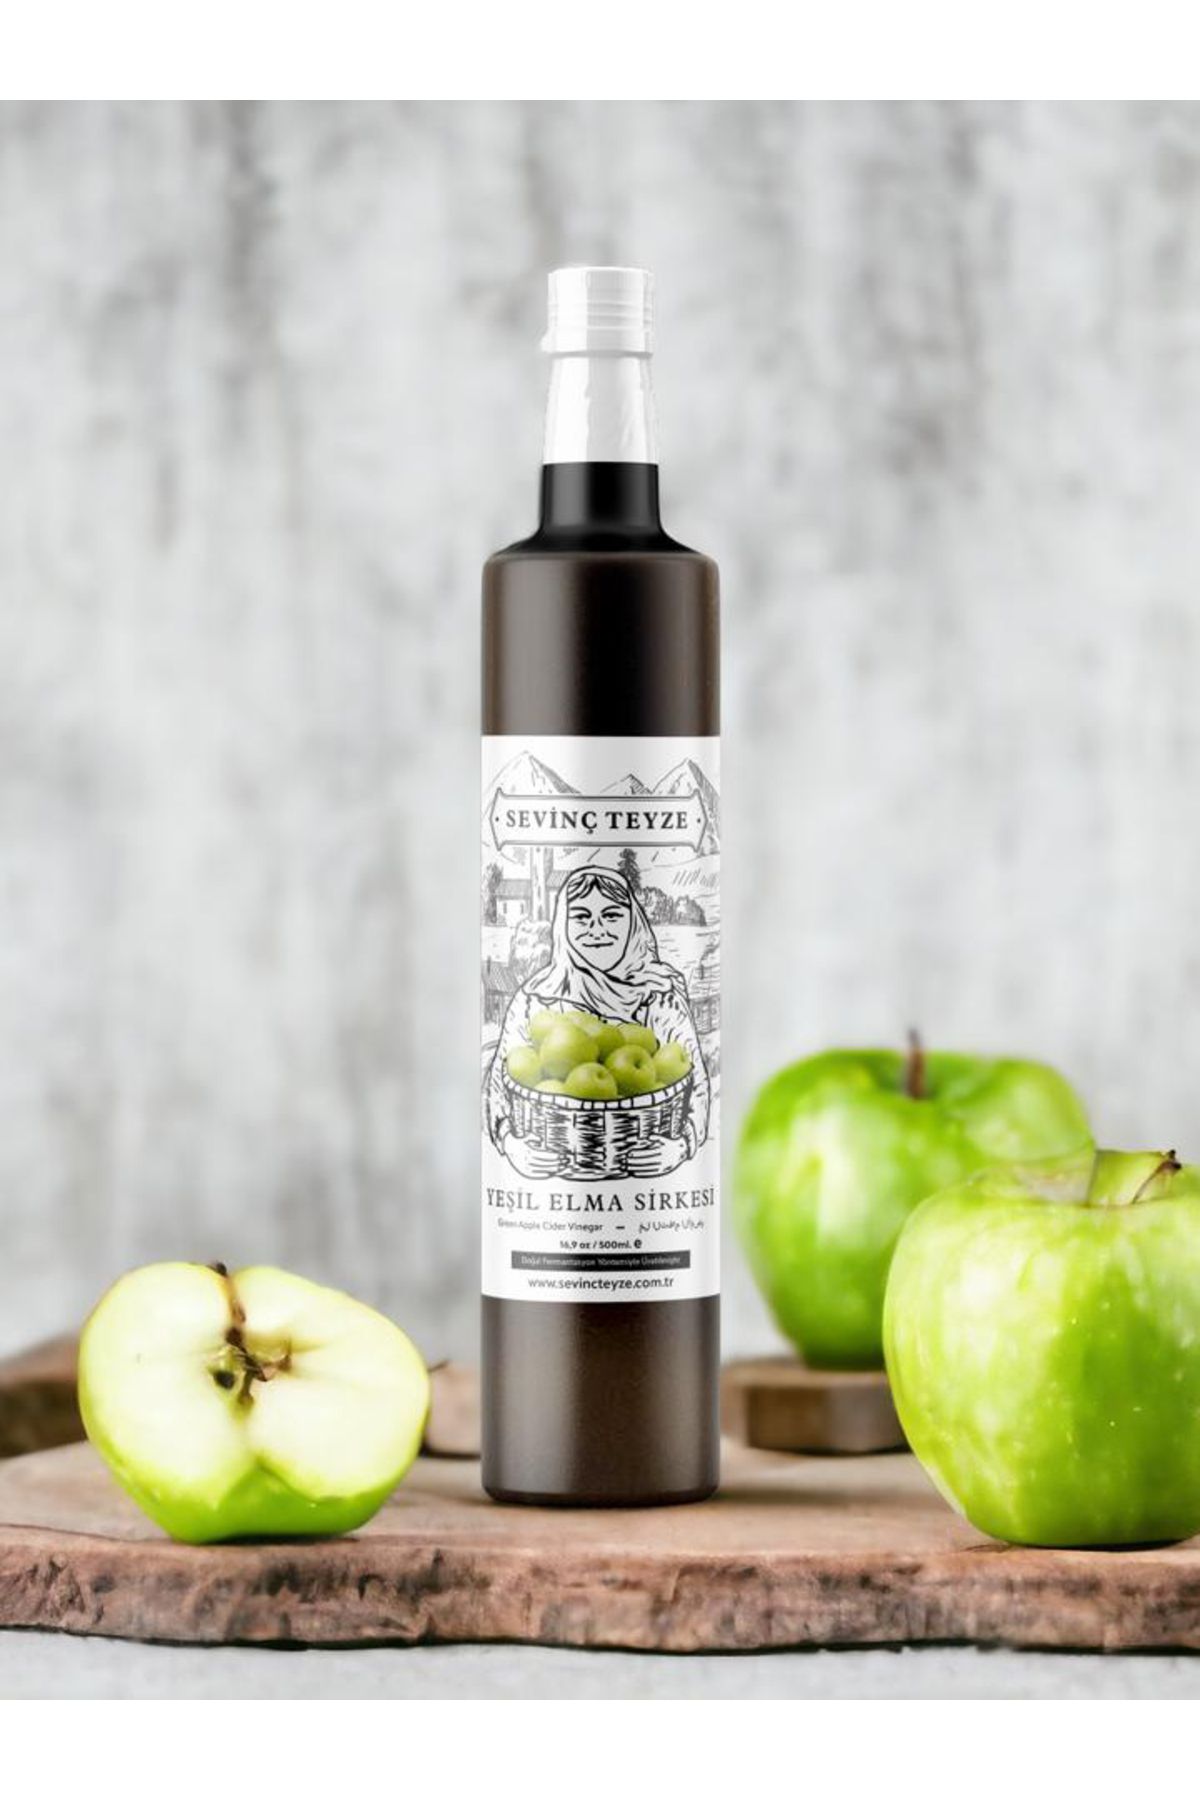 Organik Teyze Sevinç Teyze Doğal Fermantasyon Yeşil Elma Sirkesi, Green Apple Vinegar 500 Ml.